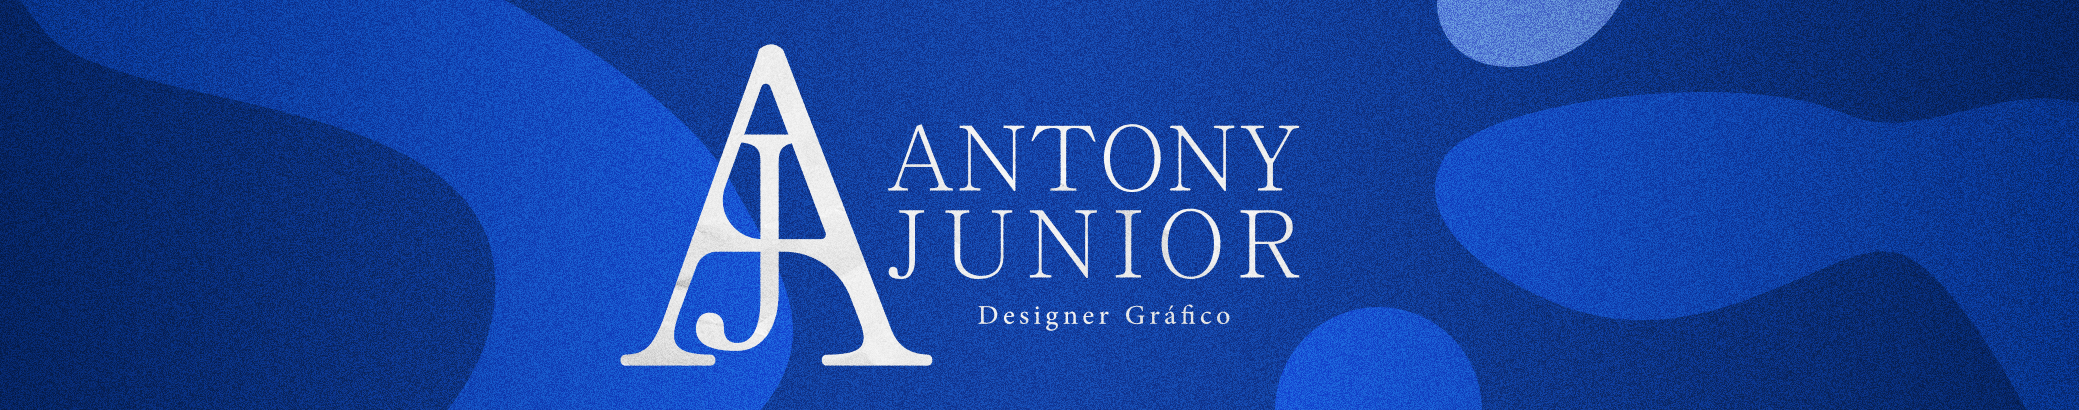 Antony Juniors profilbanner